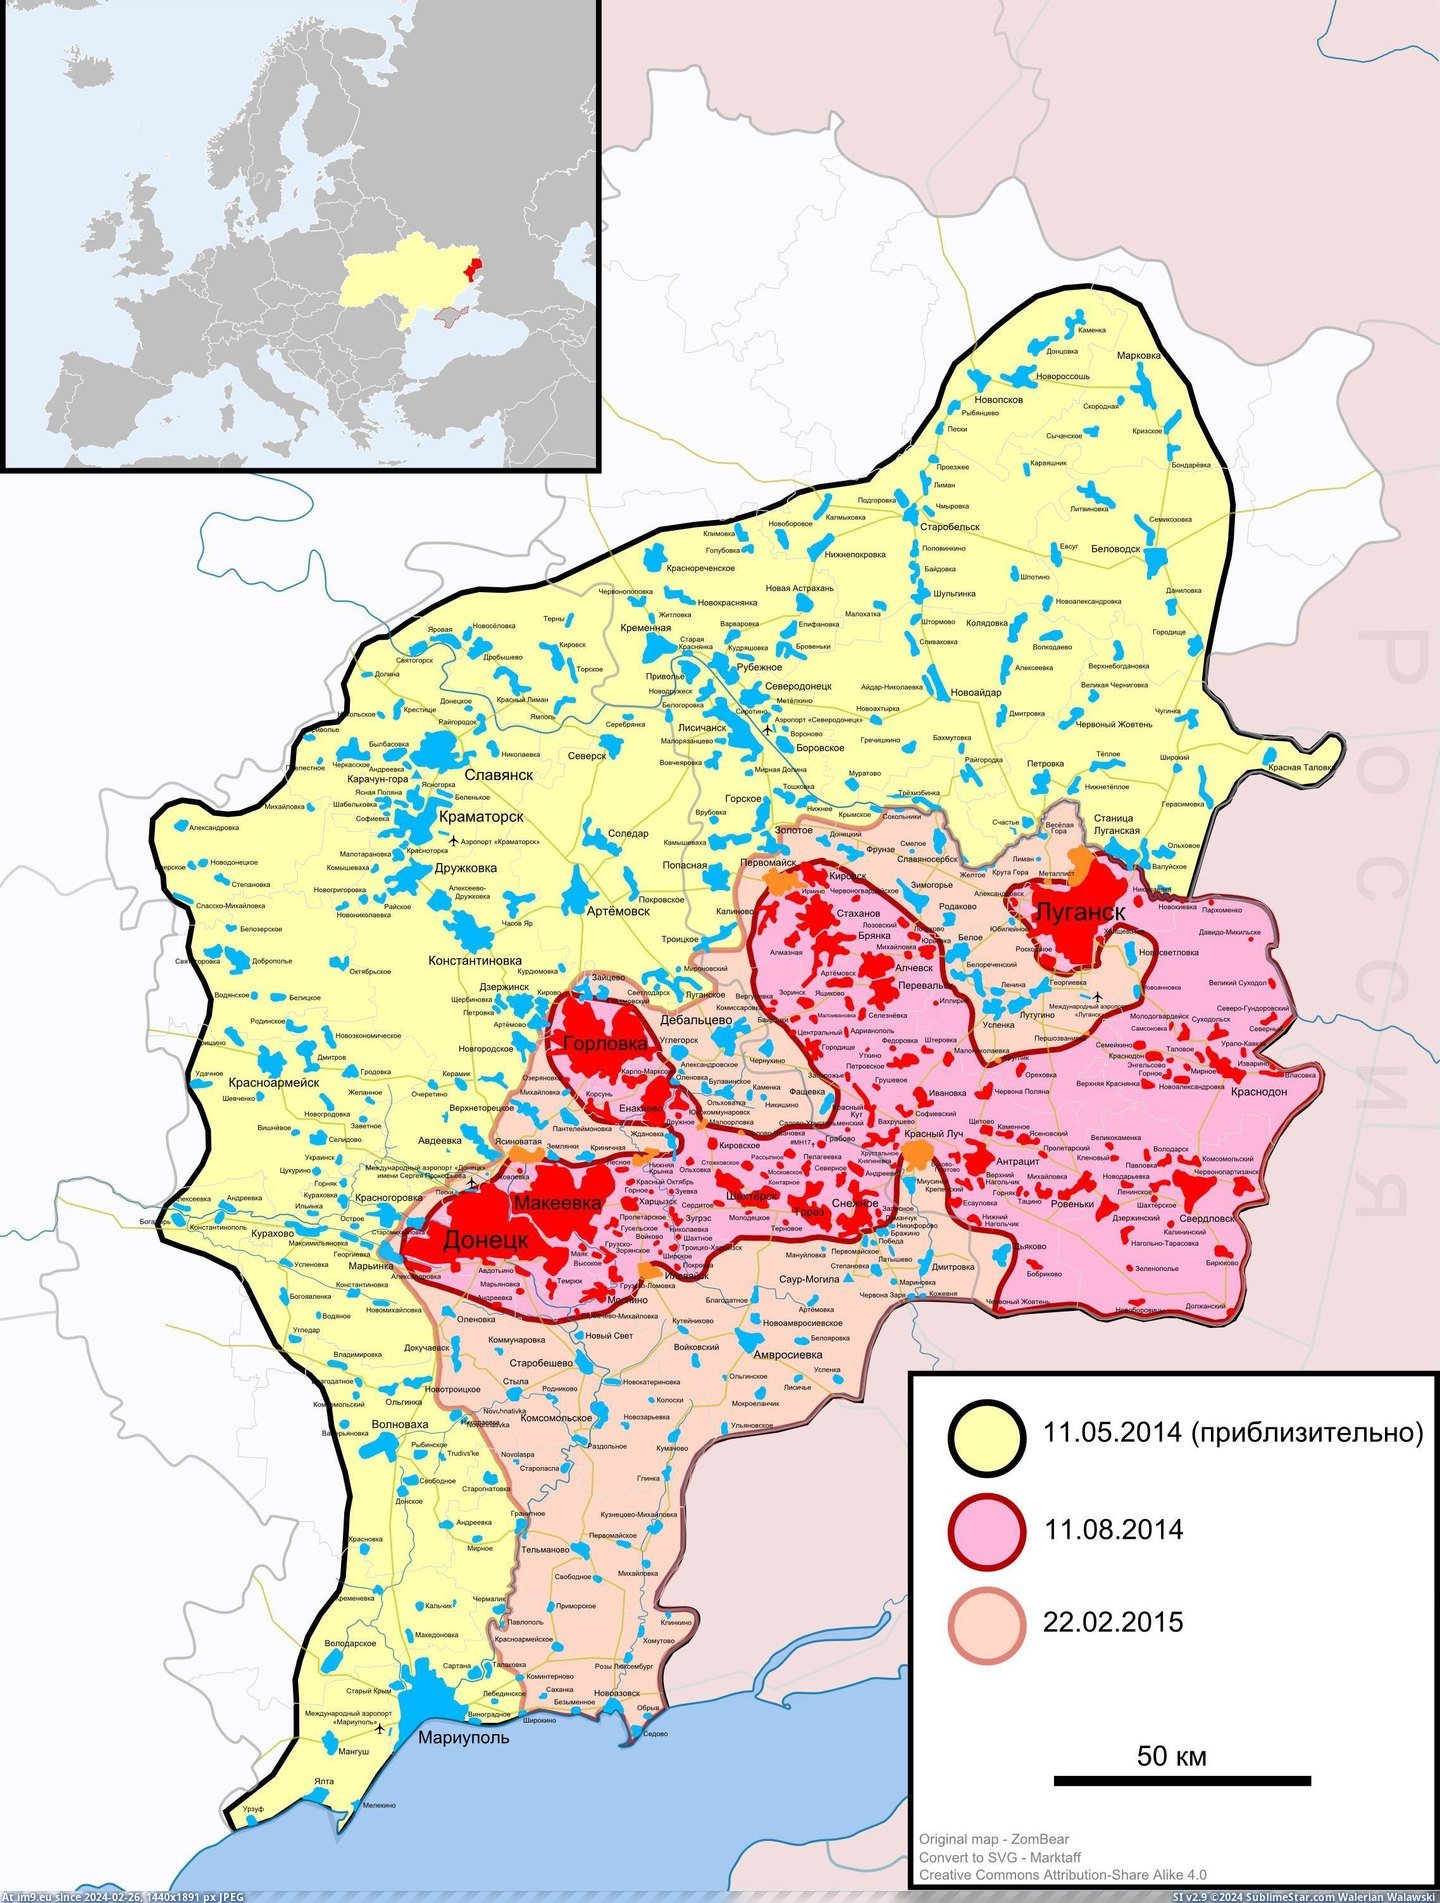 #Ukraine #East #Territorial #Rebel #Dates [Mapporn] East Ukraine rebel territorial losses and gains, with dates [2276x3001] Pic. (Bild von album My r/MAPS favs))